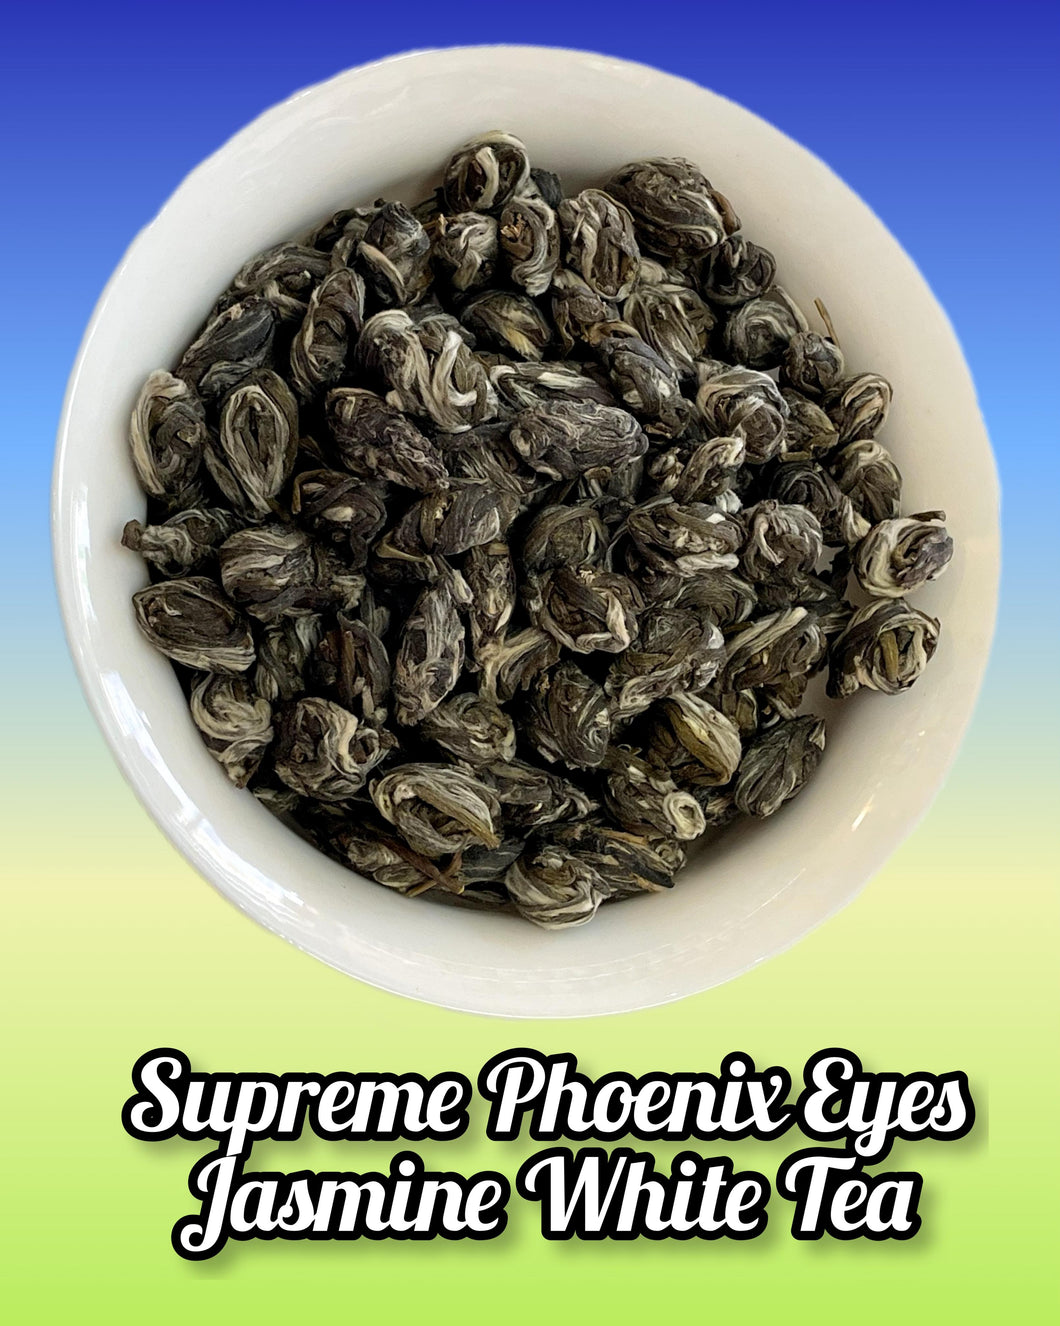 Supreme Phoenix Eyes Jasmine White Tea